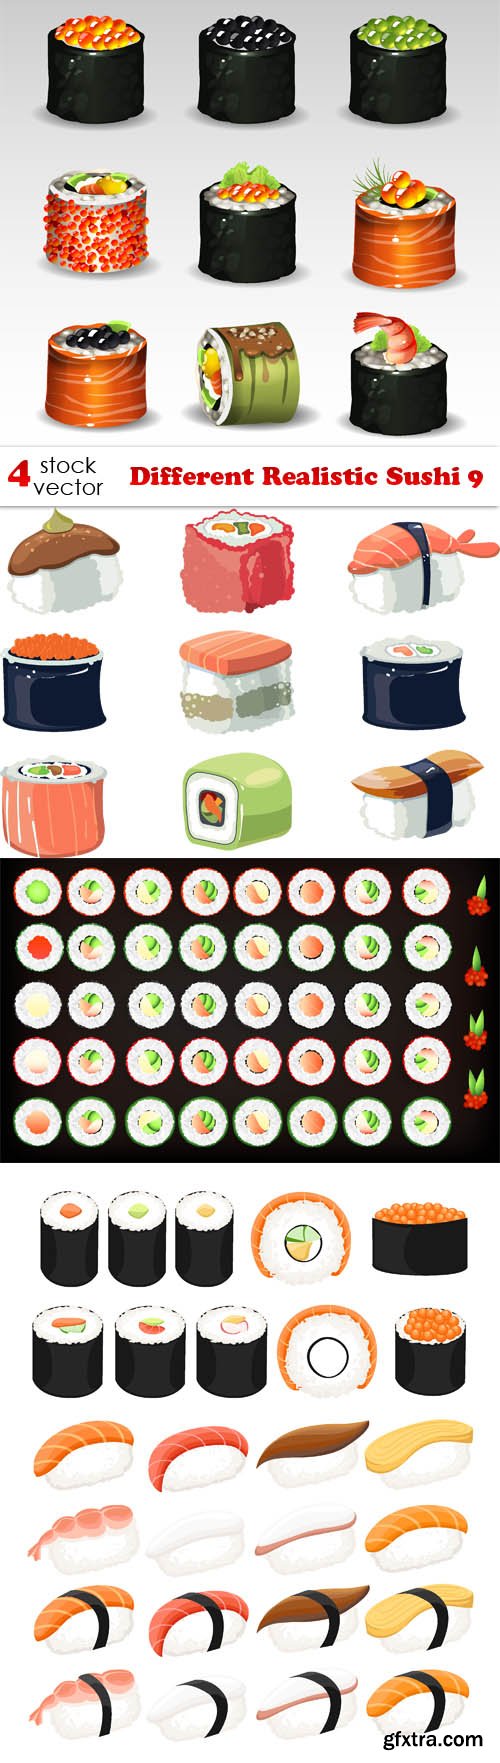 Vectors - Different Realistic Sushi 9